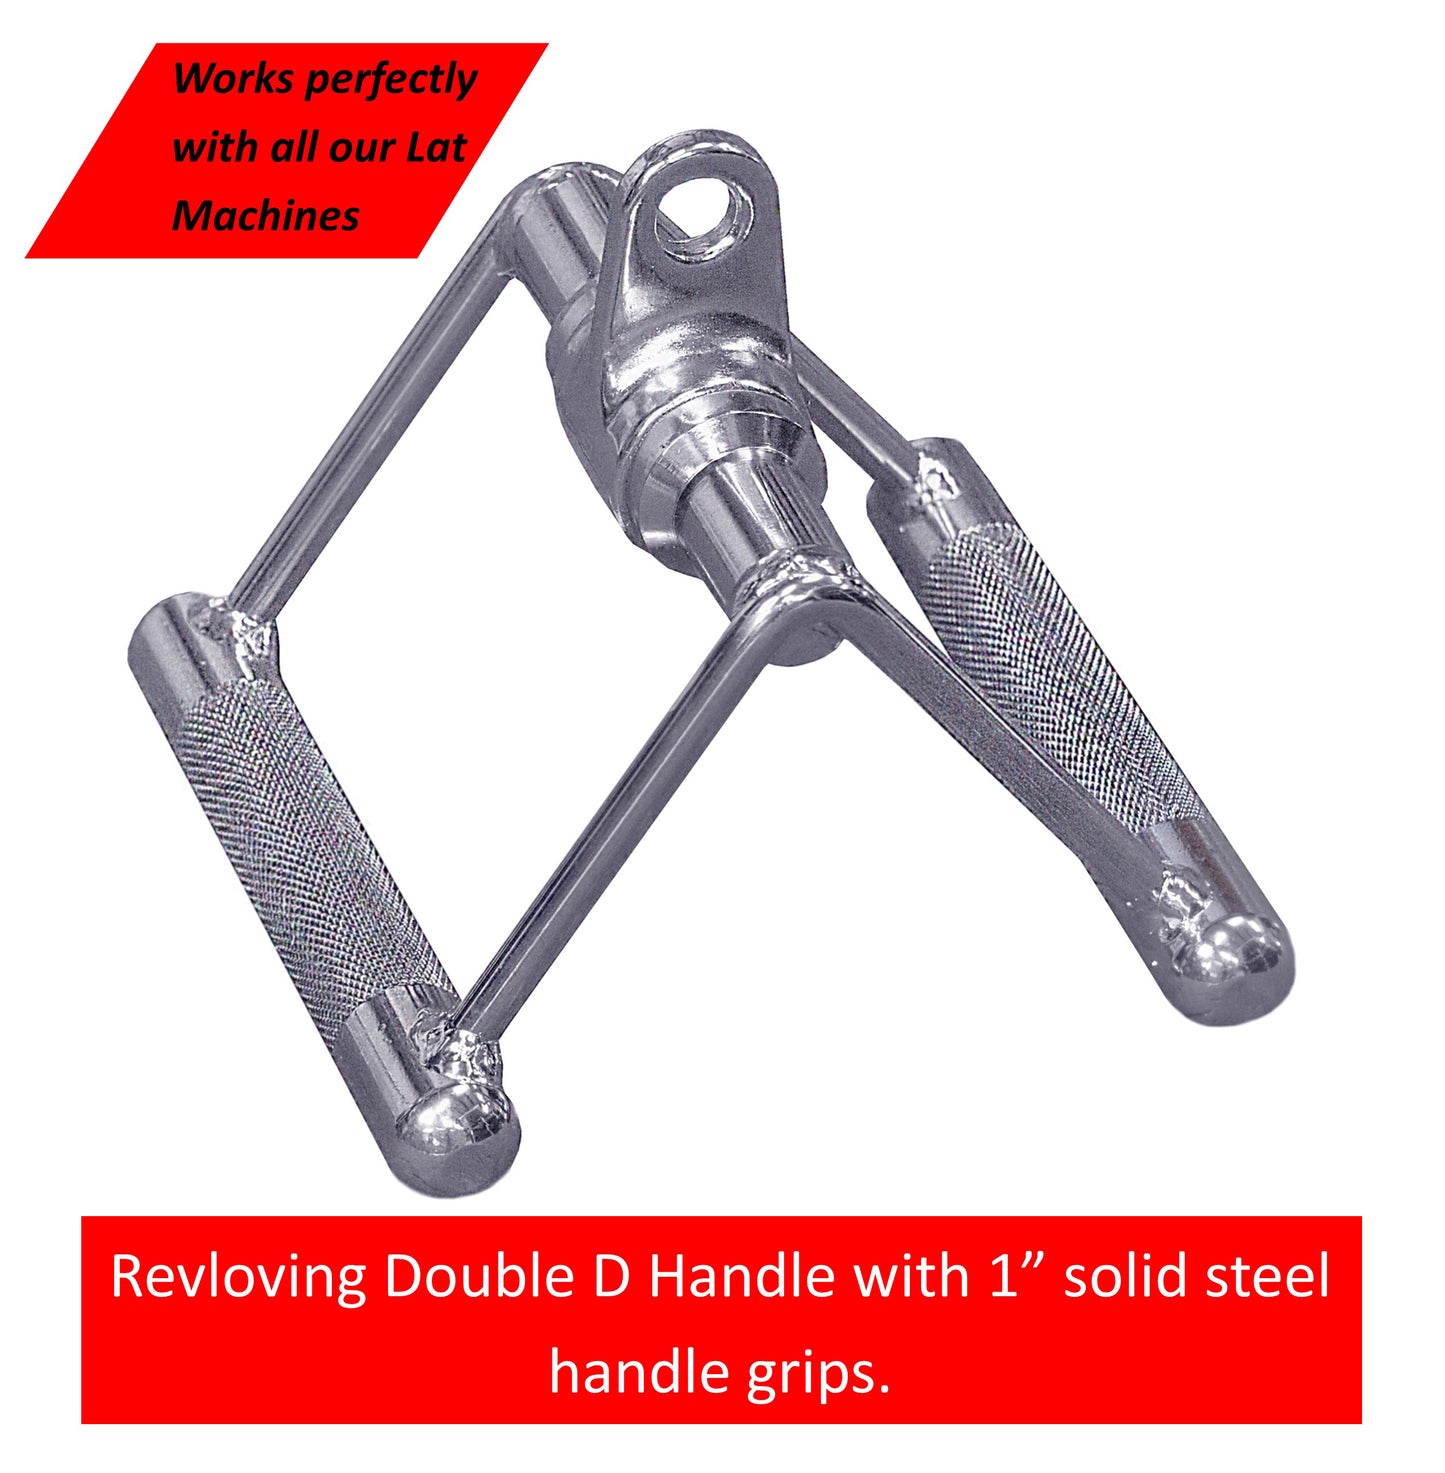 Double D Row Handle / Revolving Triangle (MBT-502RH)